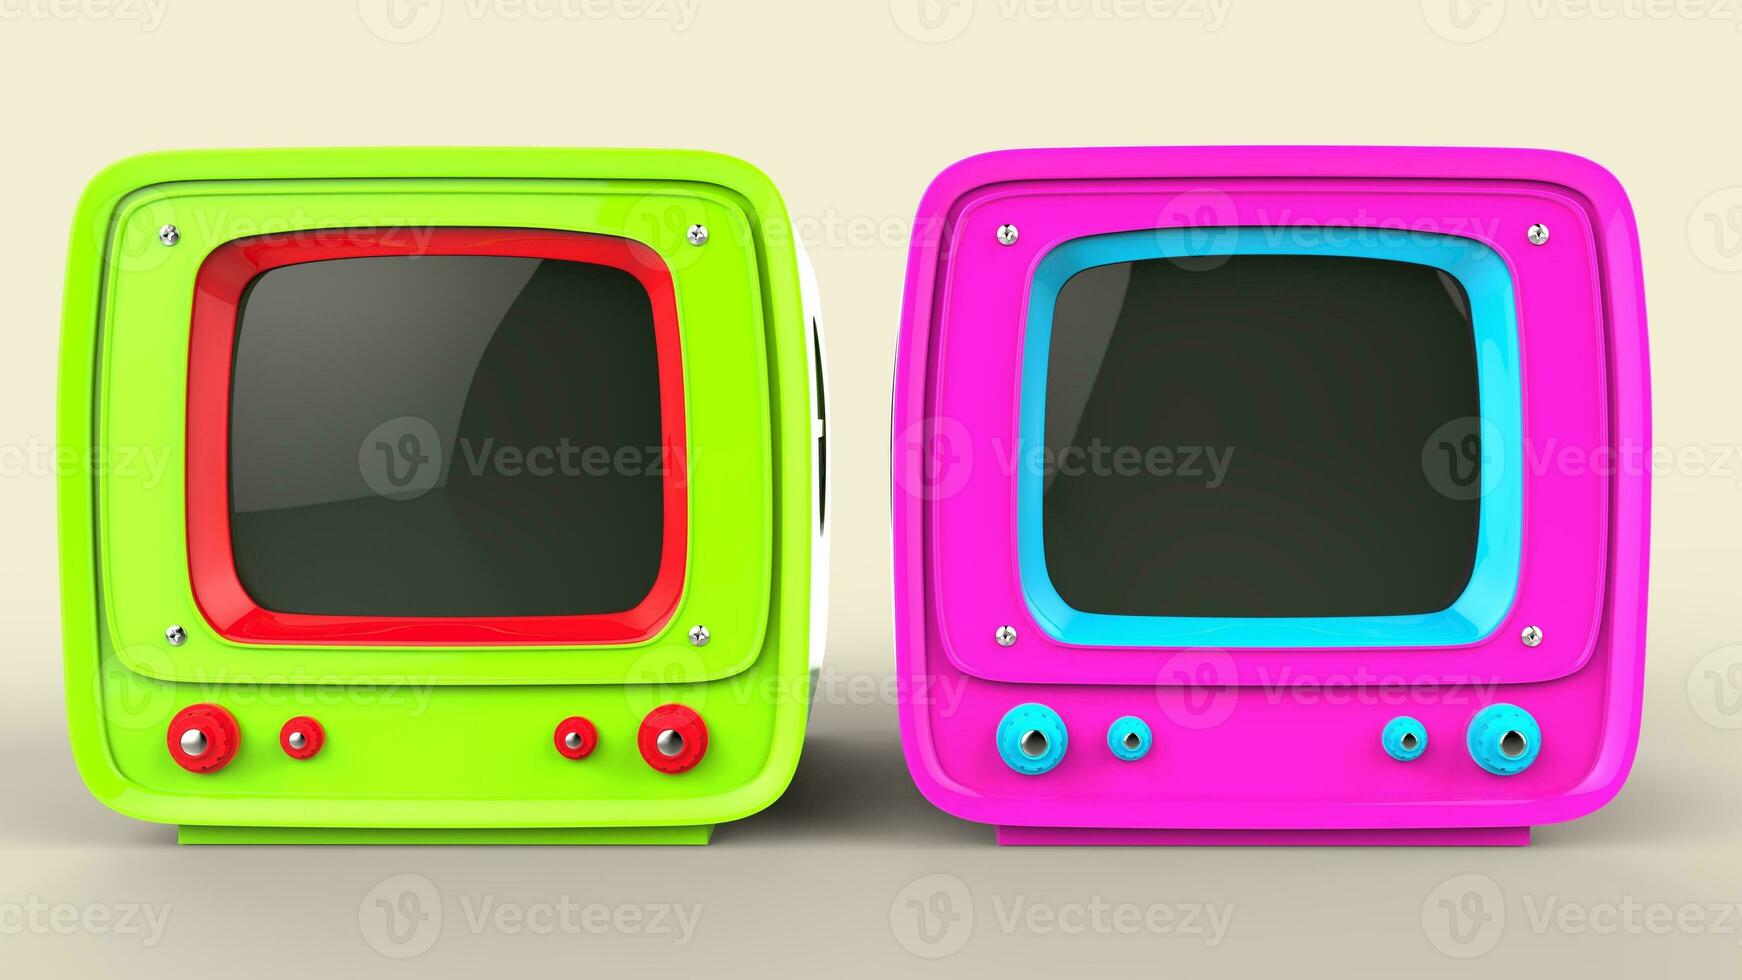 Vintage ▾ stile verde e rosa televisione imposta foto